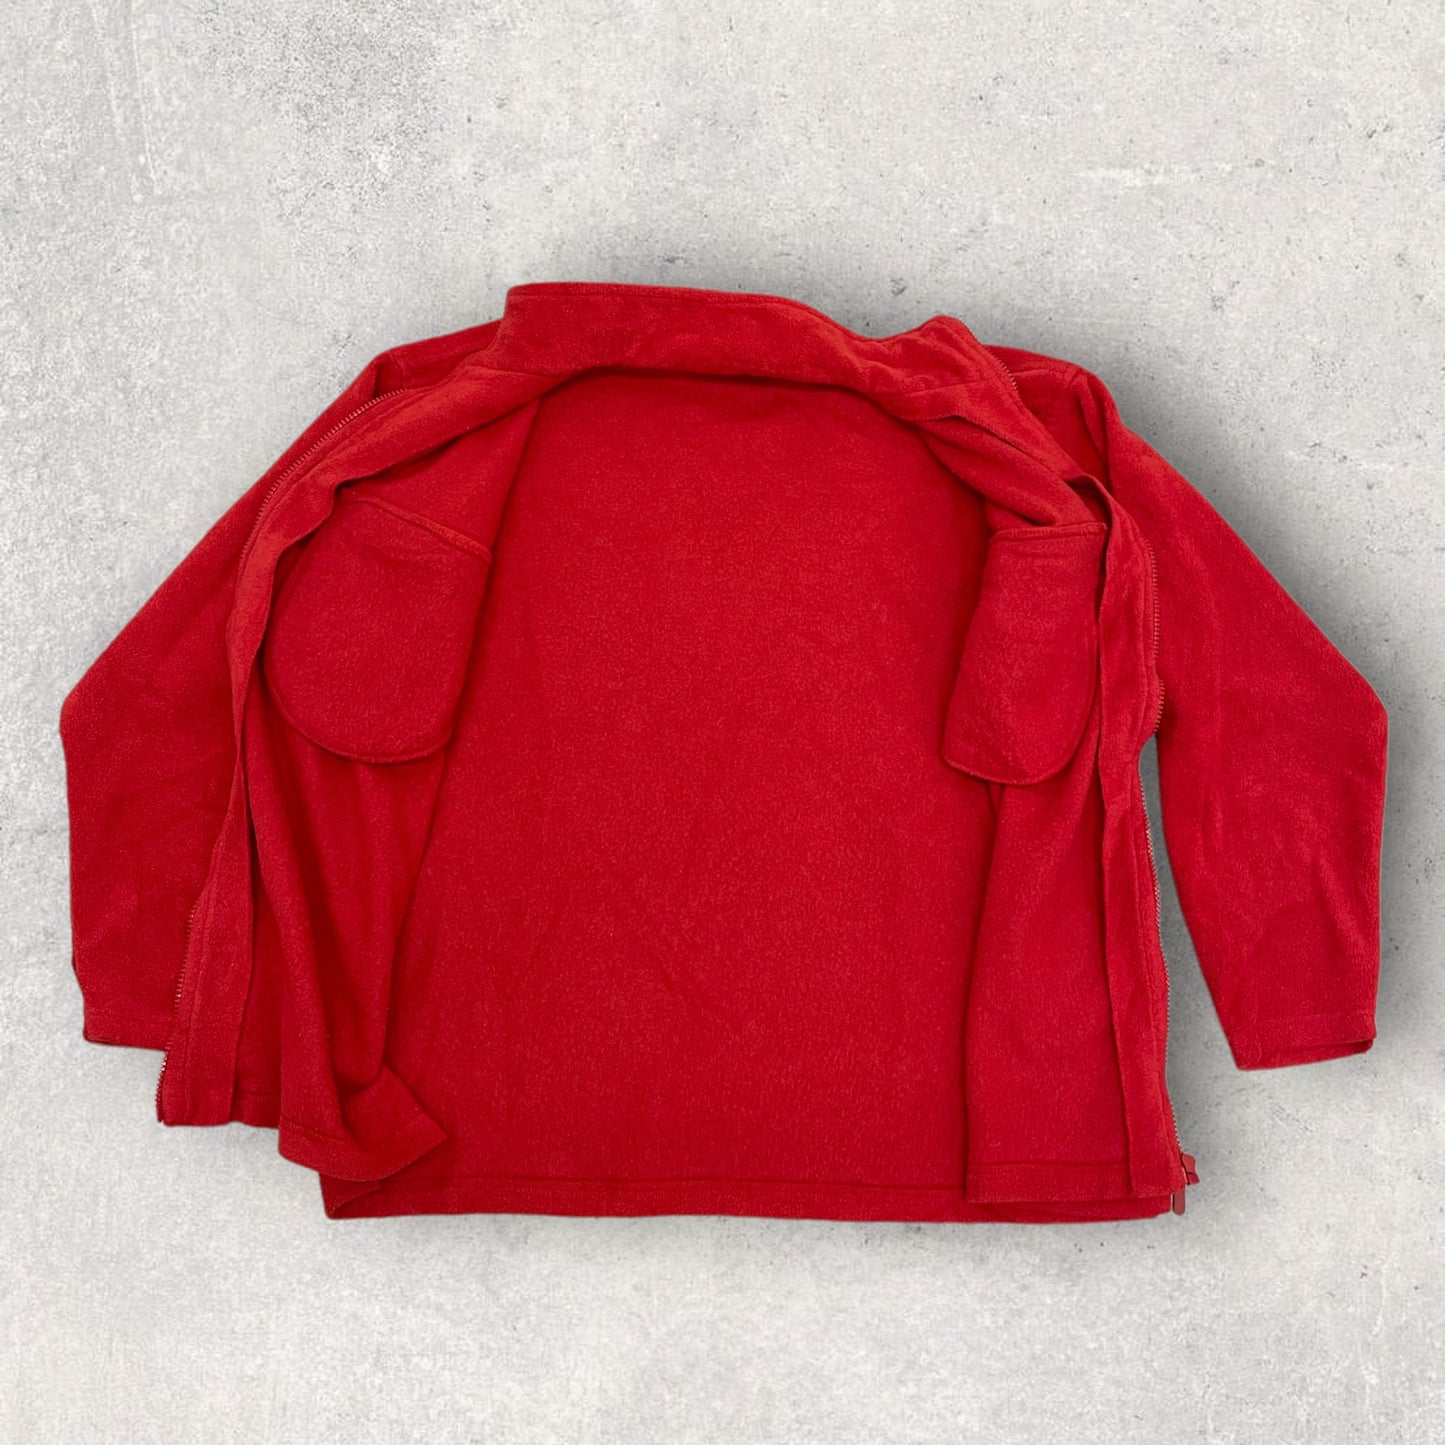 Vintage Nike Fleece Jacket Size M Red 90s Retro FL_2